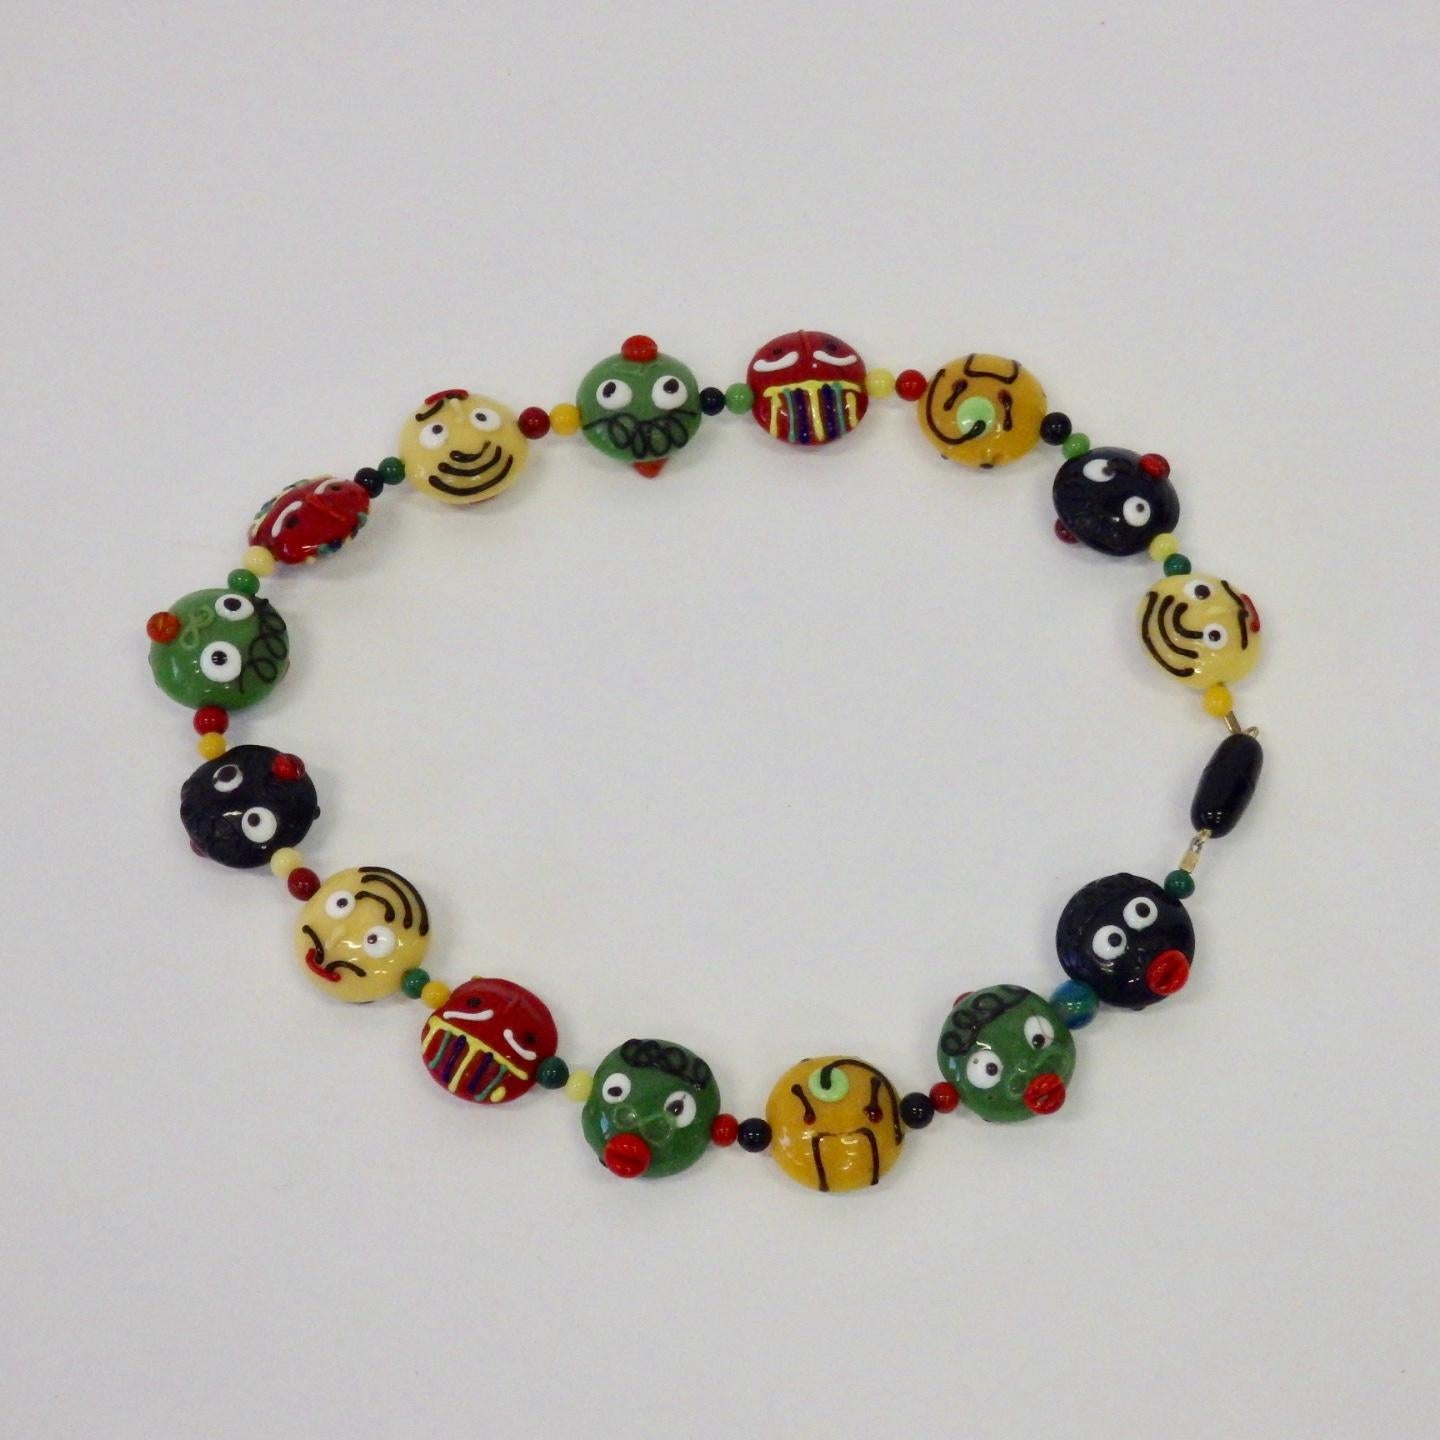 Art Glass Whimsical Red, Yellow, Green, Black Murano Italian Glass Bead Necklace